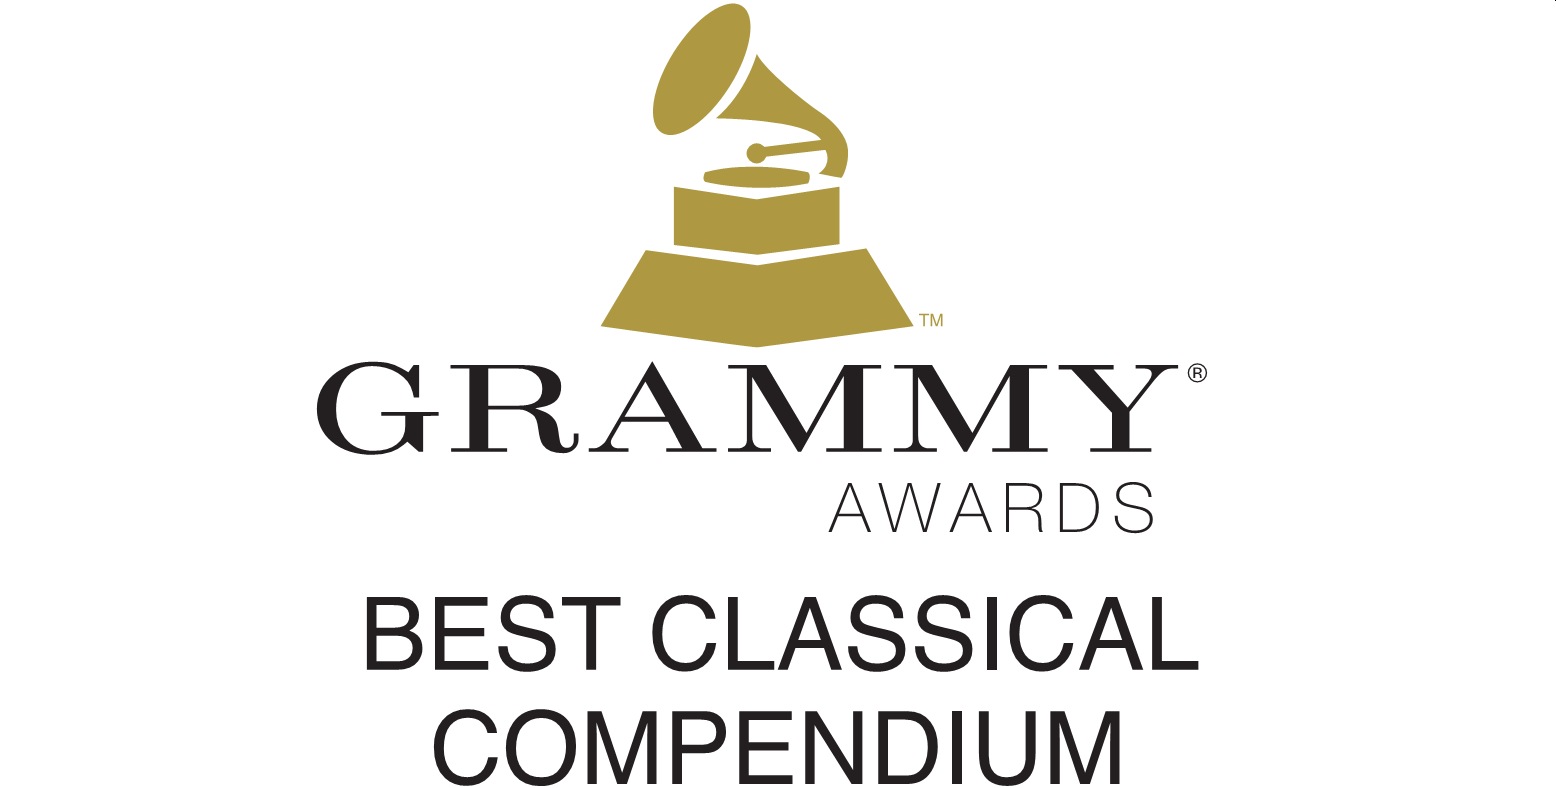 Grammy Award: 'Best Classical Compendium' (2018)